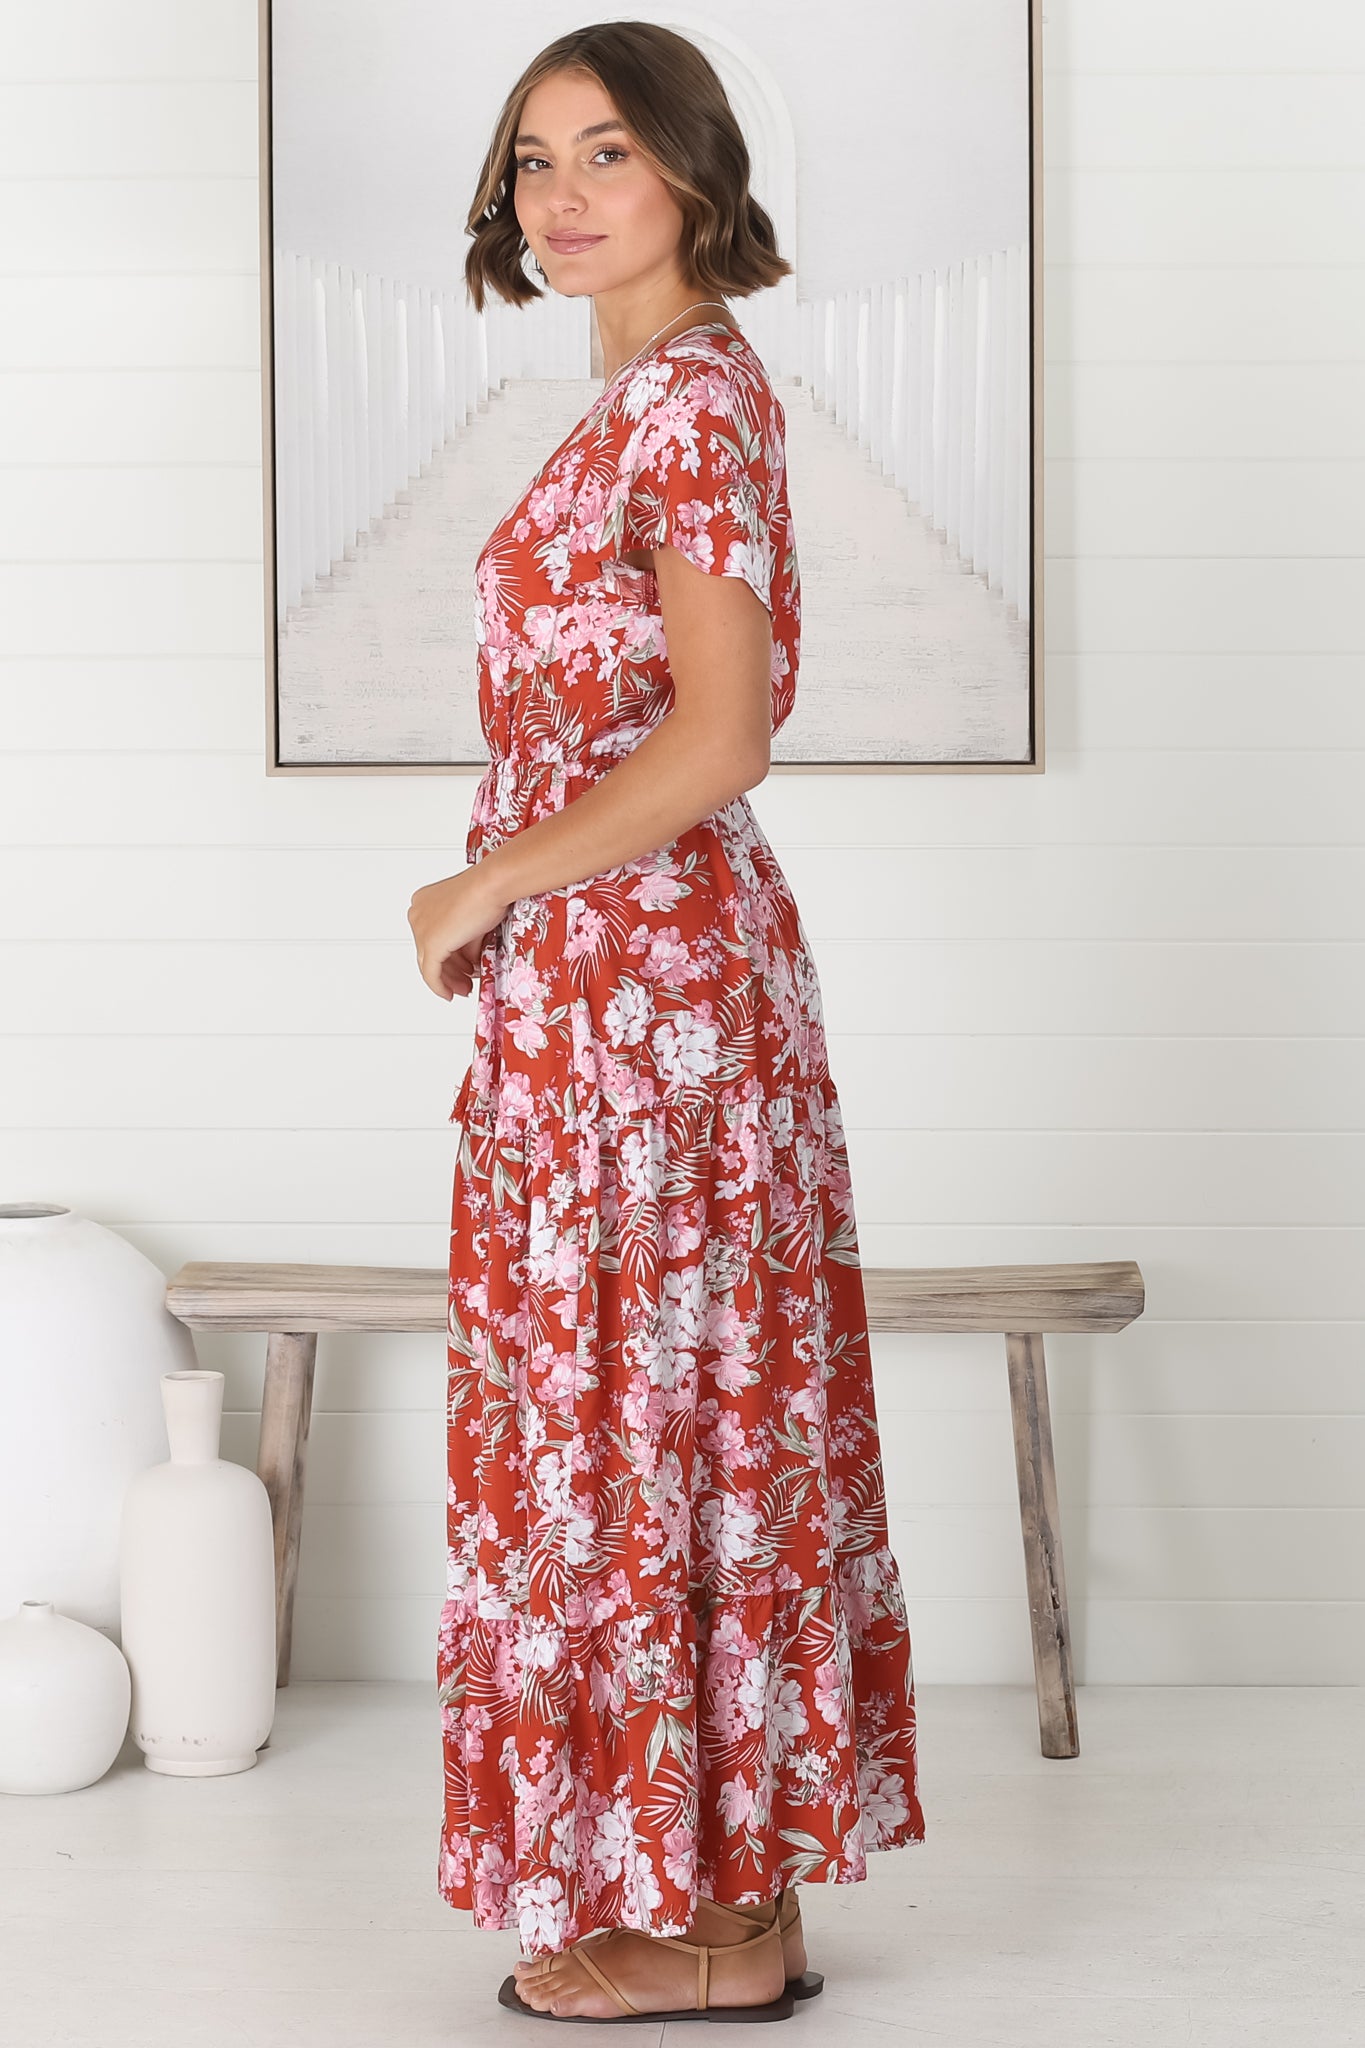 Derla Maxi Dress - V Neck A Line Dress with Tassel Pull Tie Wasit in Willa Print